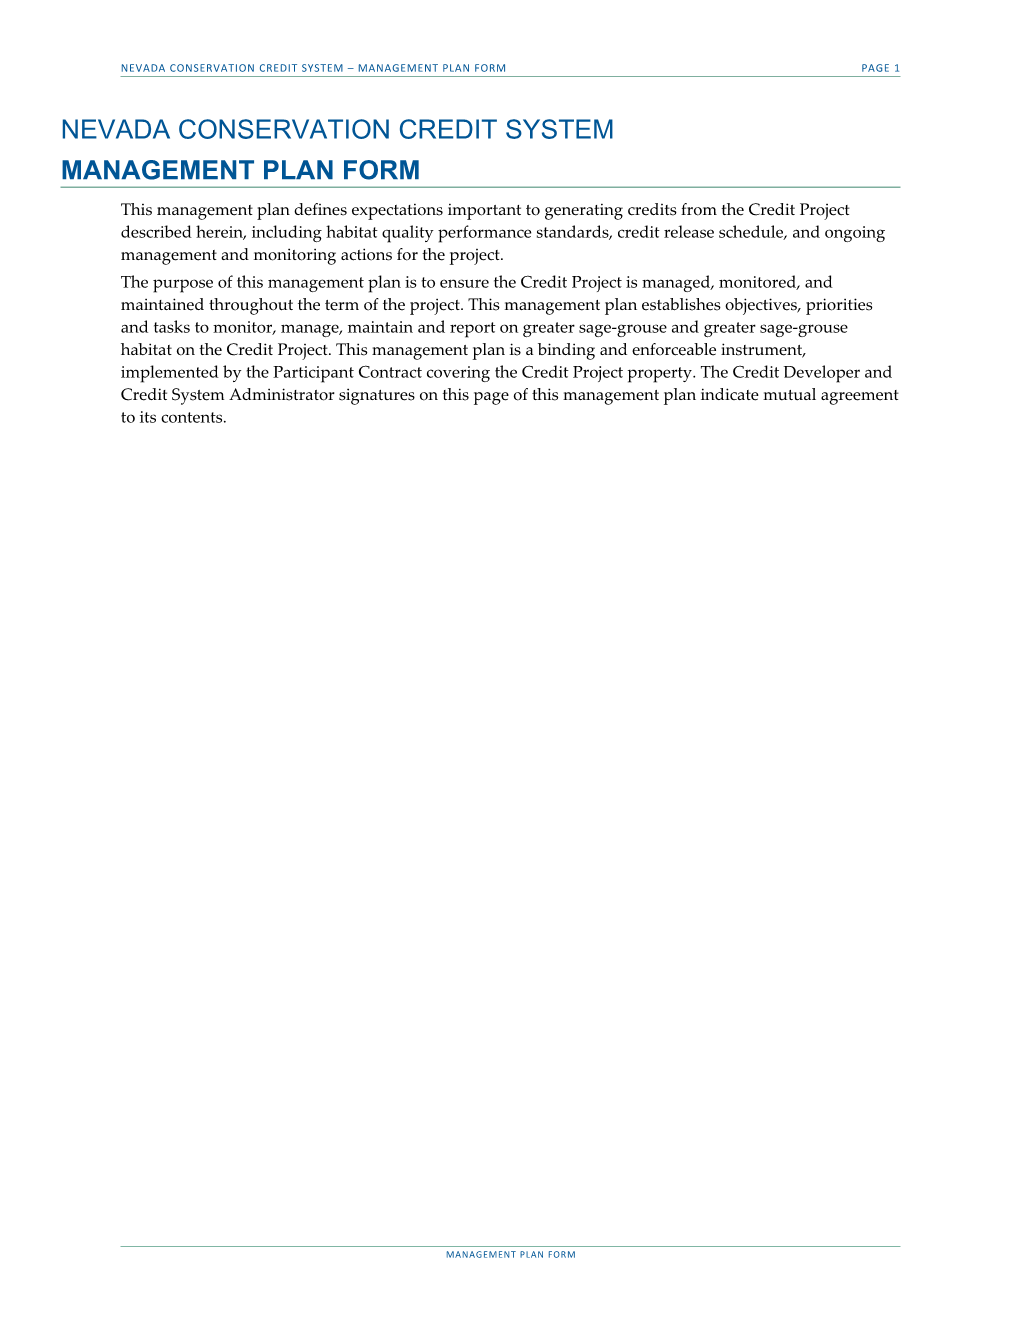 Management Plan Form